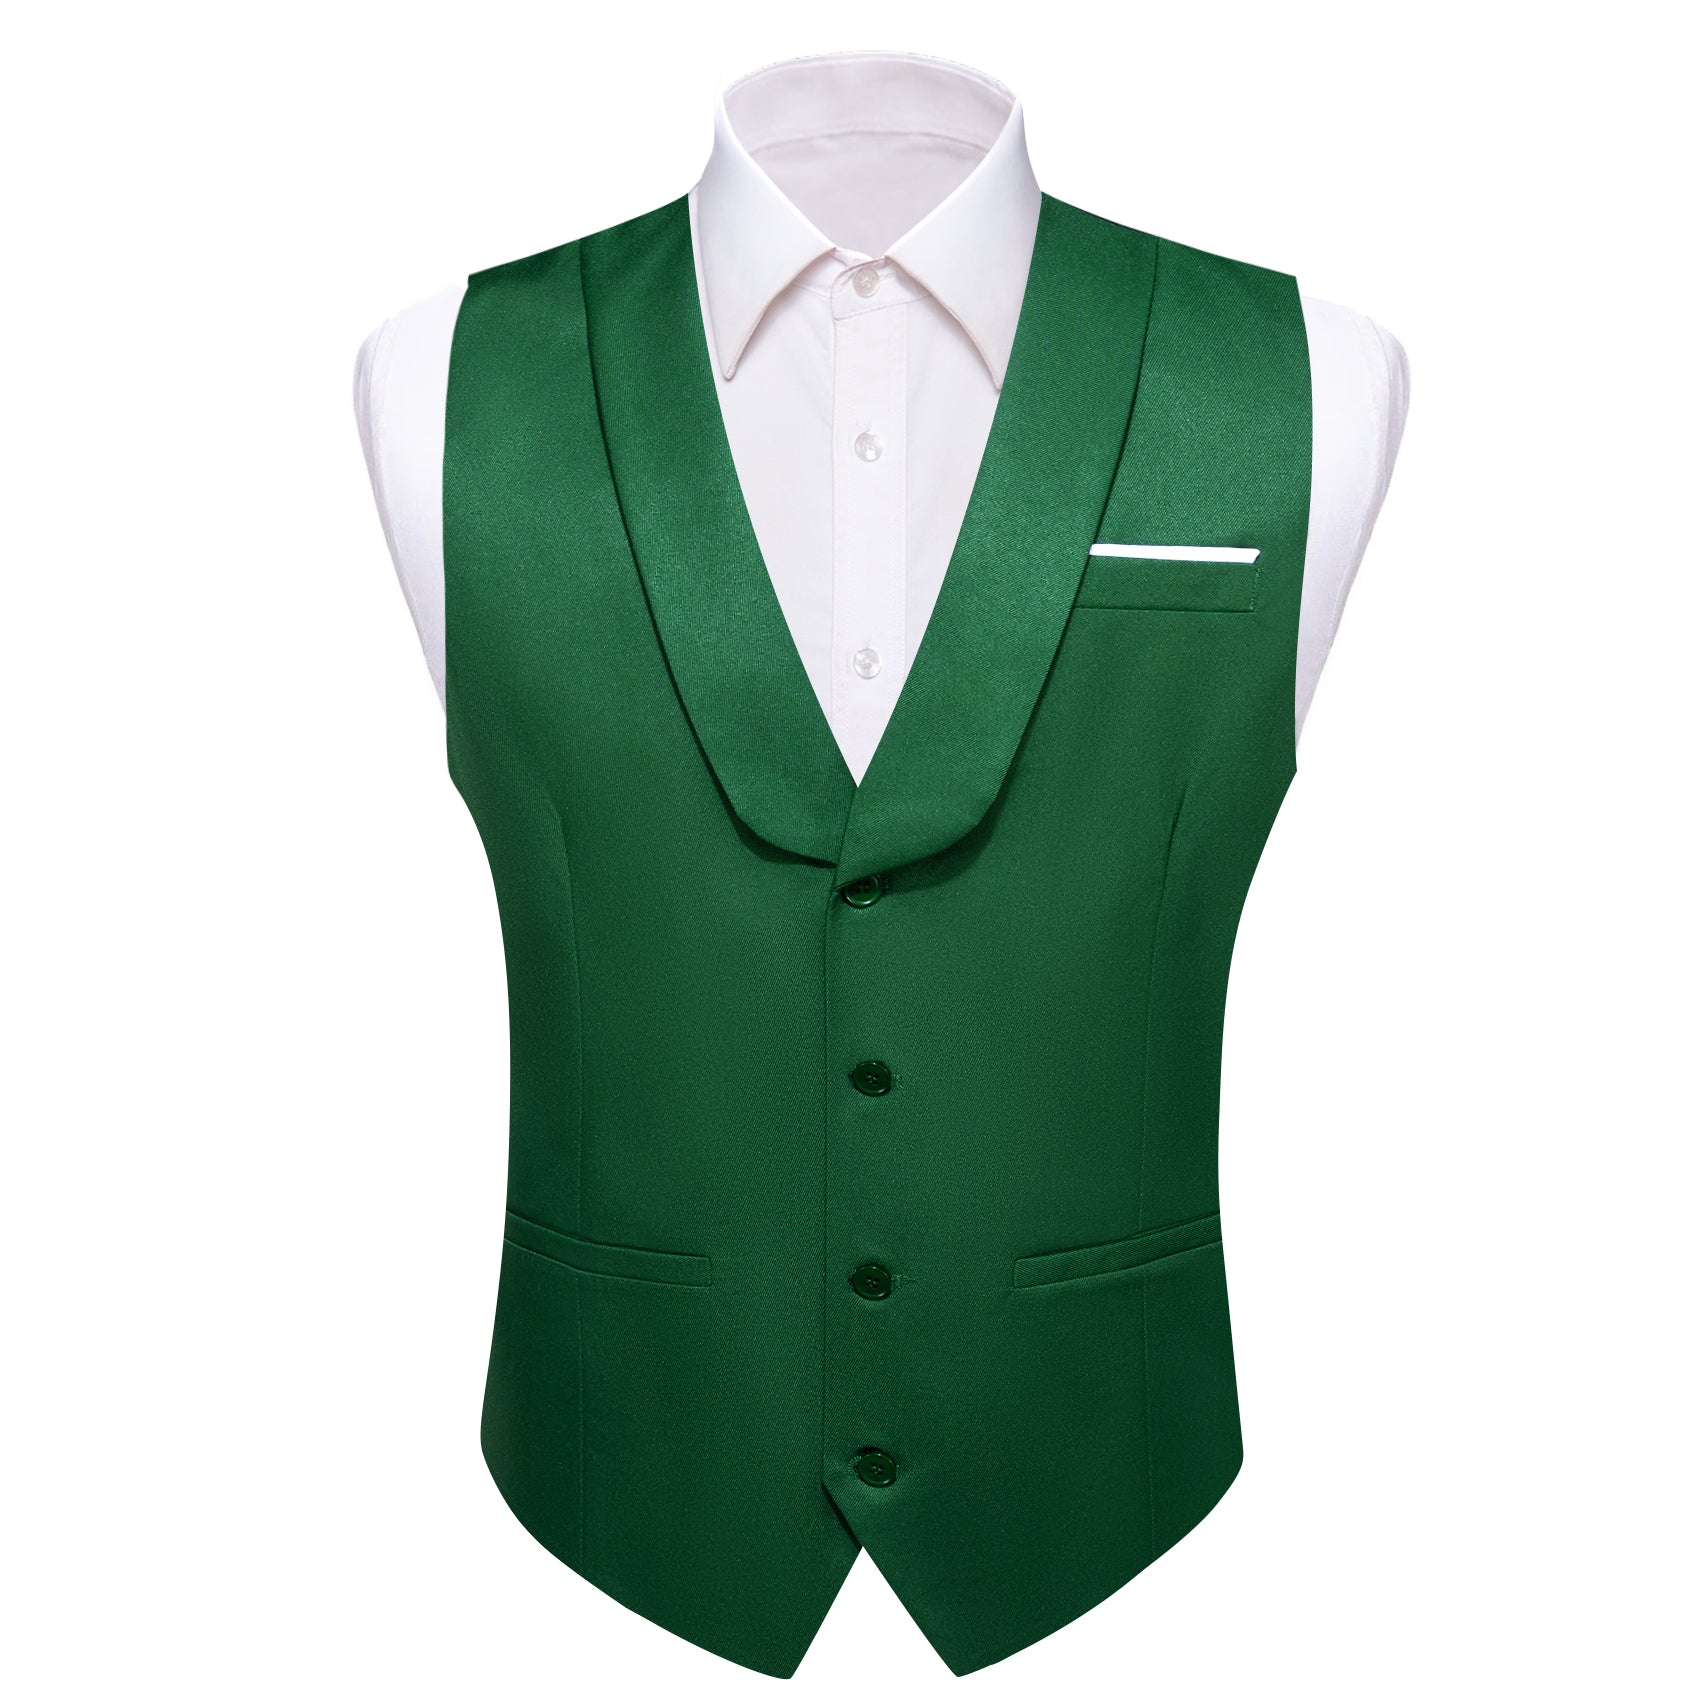 Barry.wang Novetly Grass Green Solid Vest Waistcoat Set